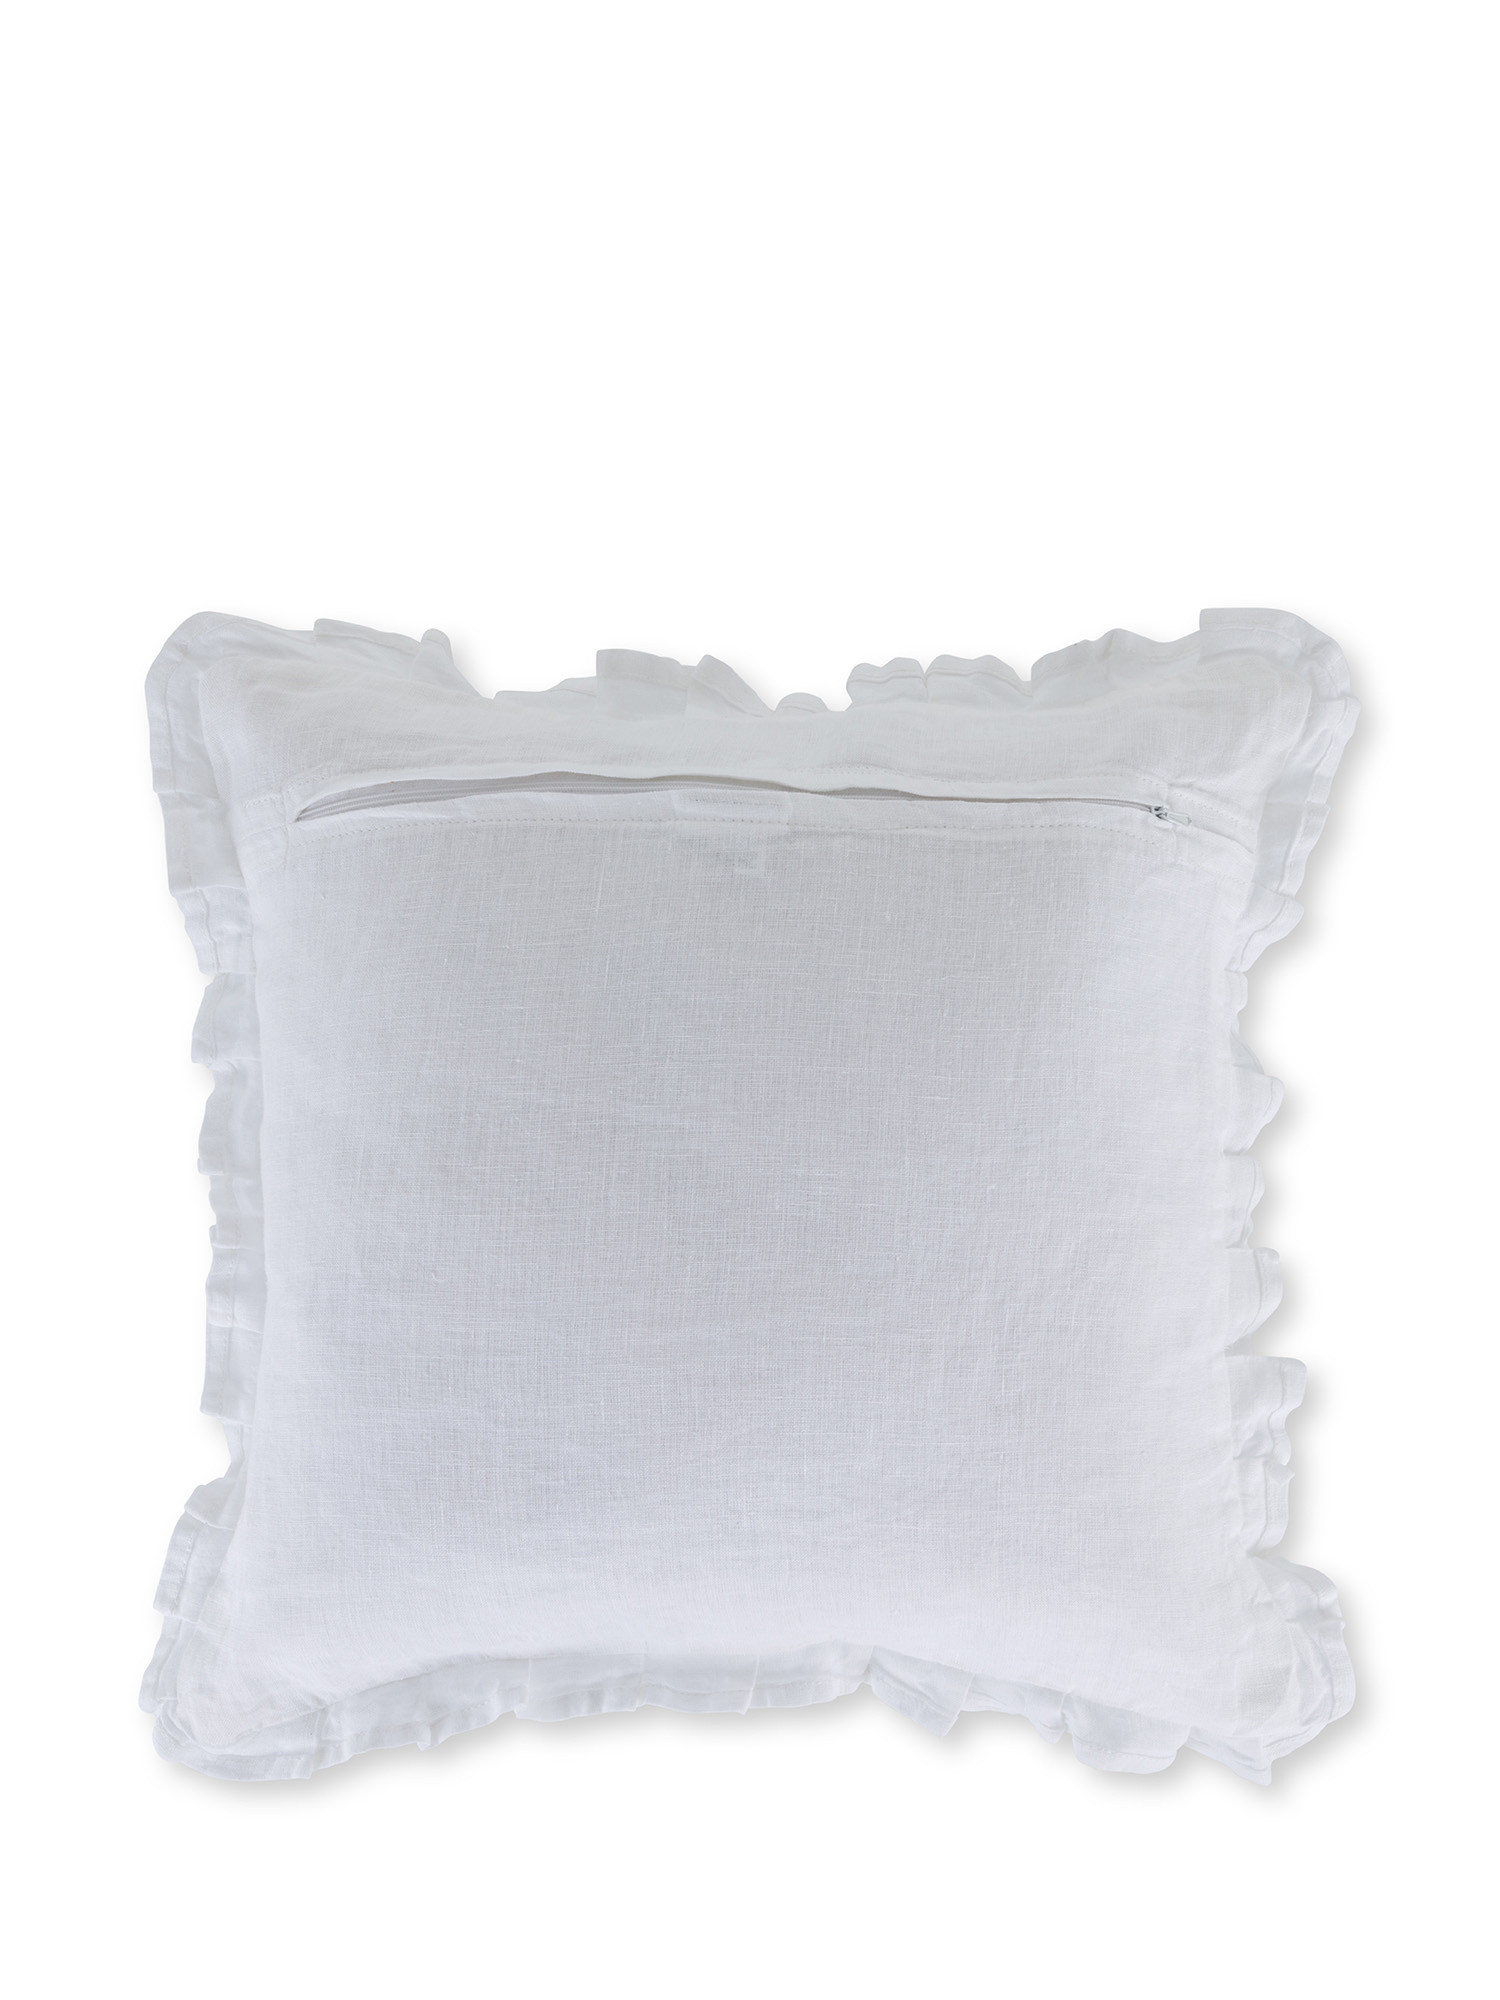 Cuscino rigato in puro lino 40x40 cm, Bianco, large image number 1